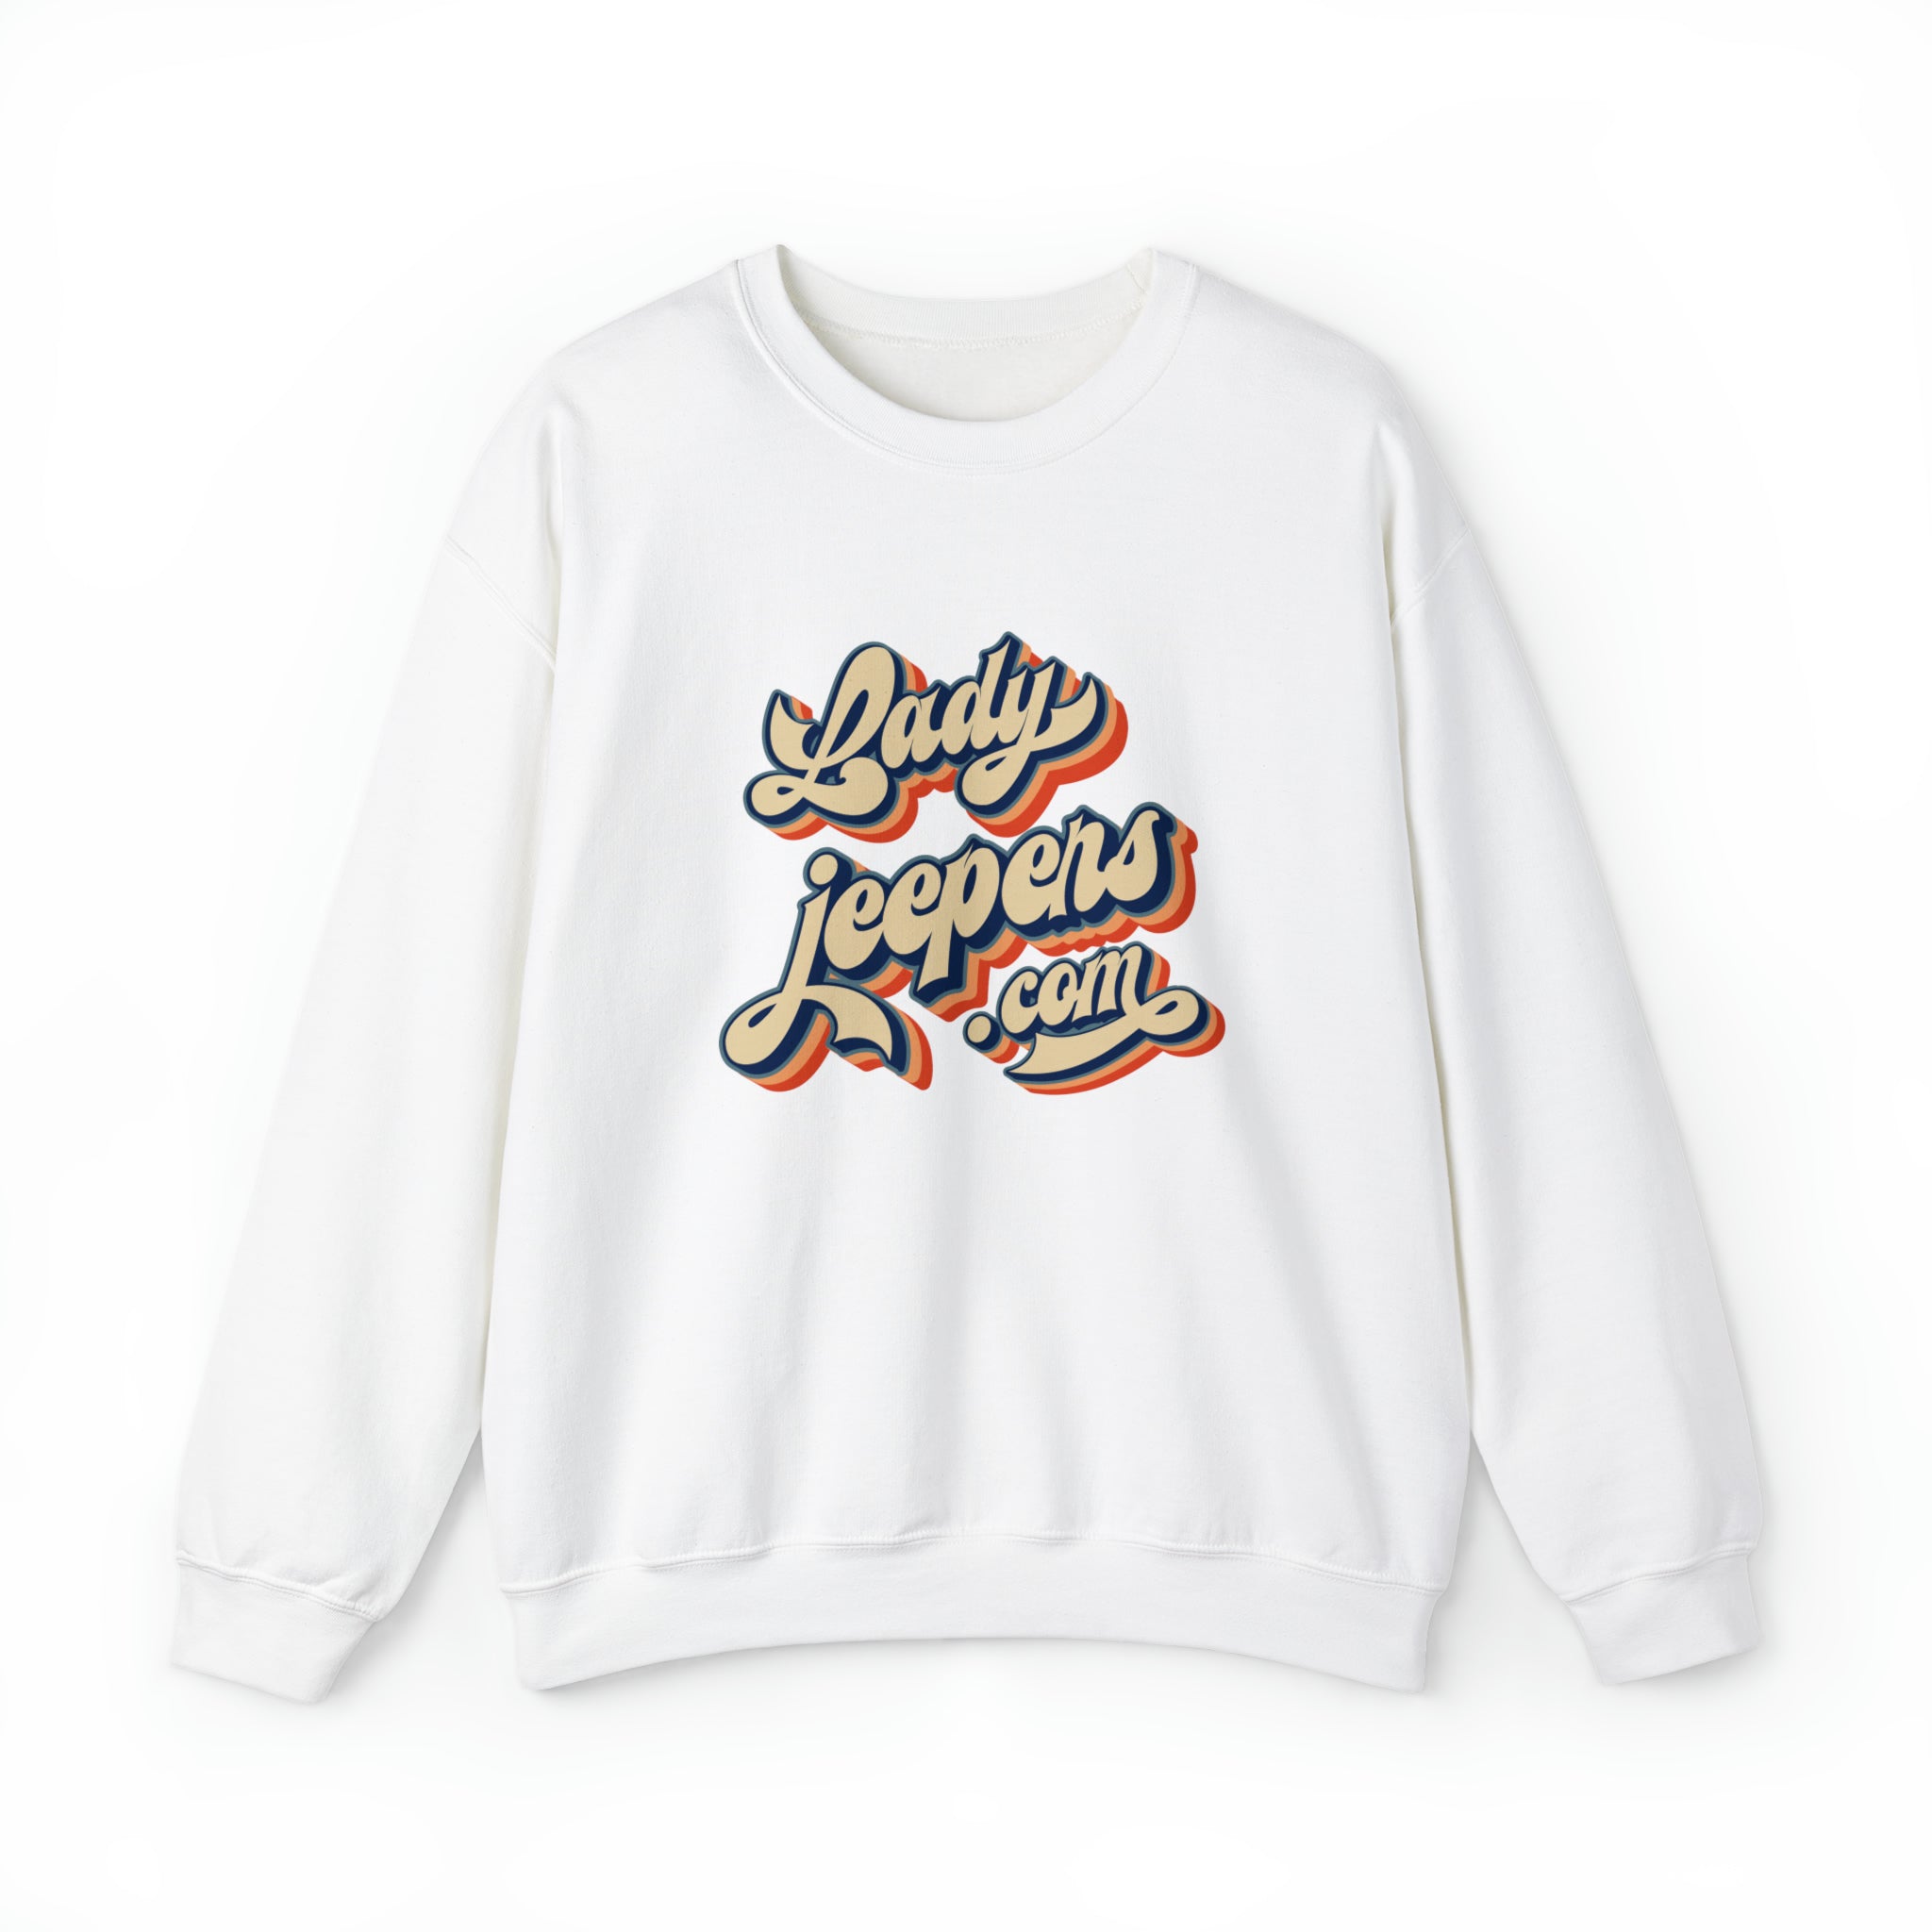 Retro LadyJeepers.com Crewneck Sweatshirt